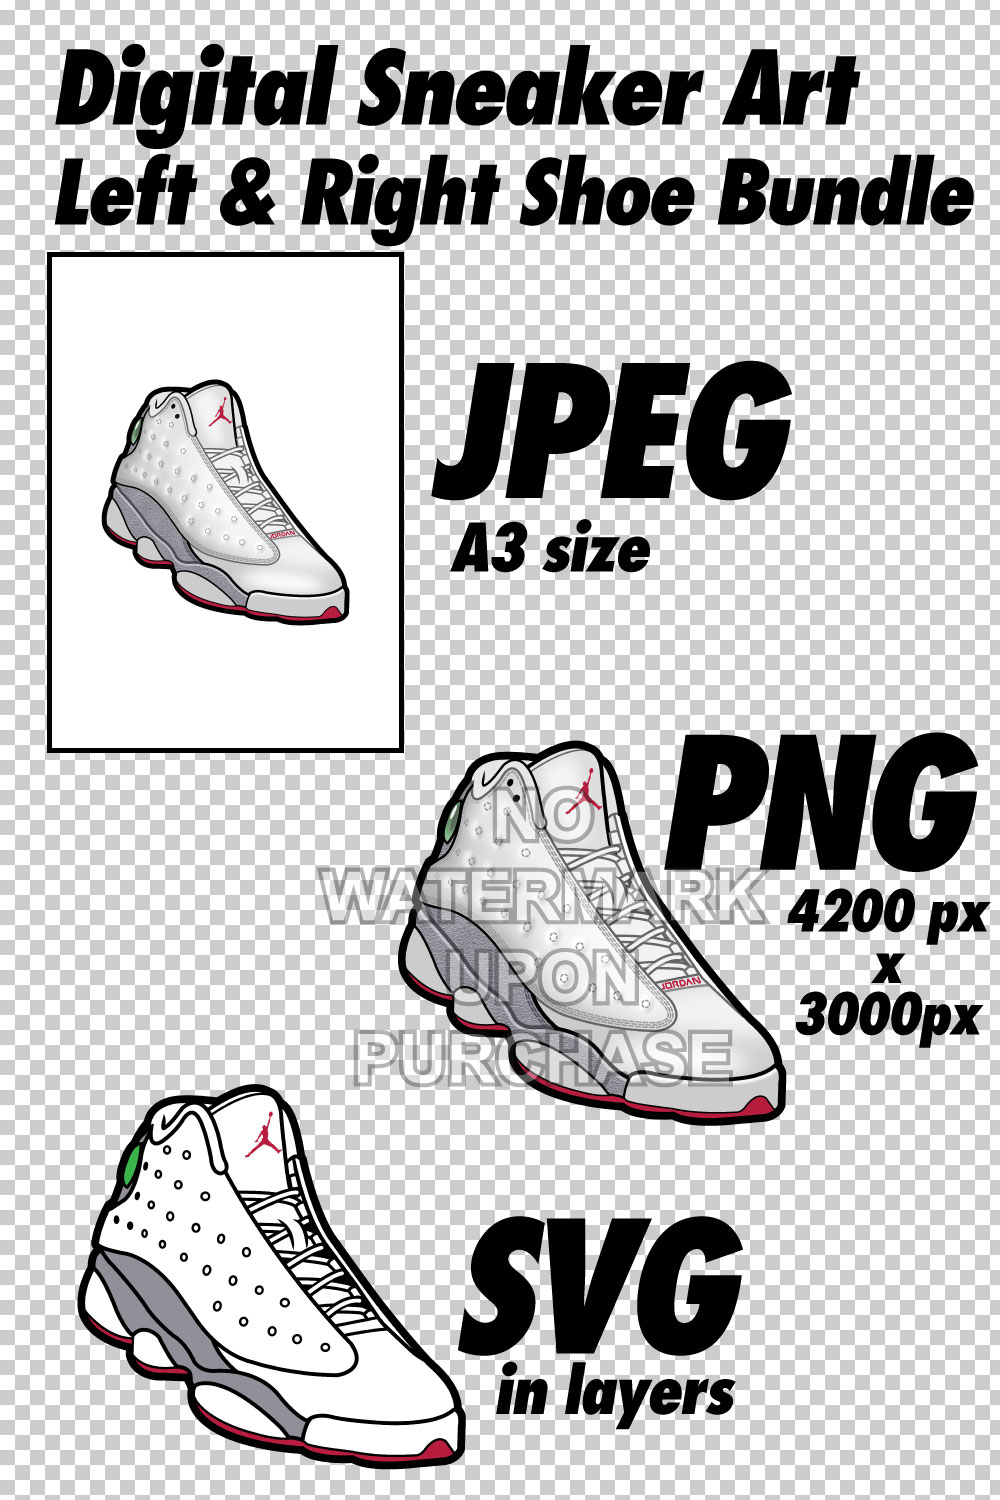 Air Jordan 13 Wolf Grey JPEG PNG SVG right & left shoe bundle pinterest preview image.